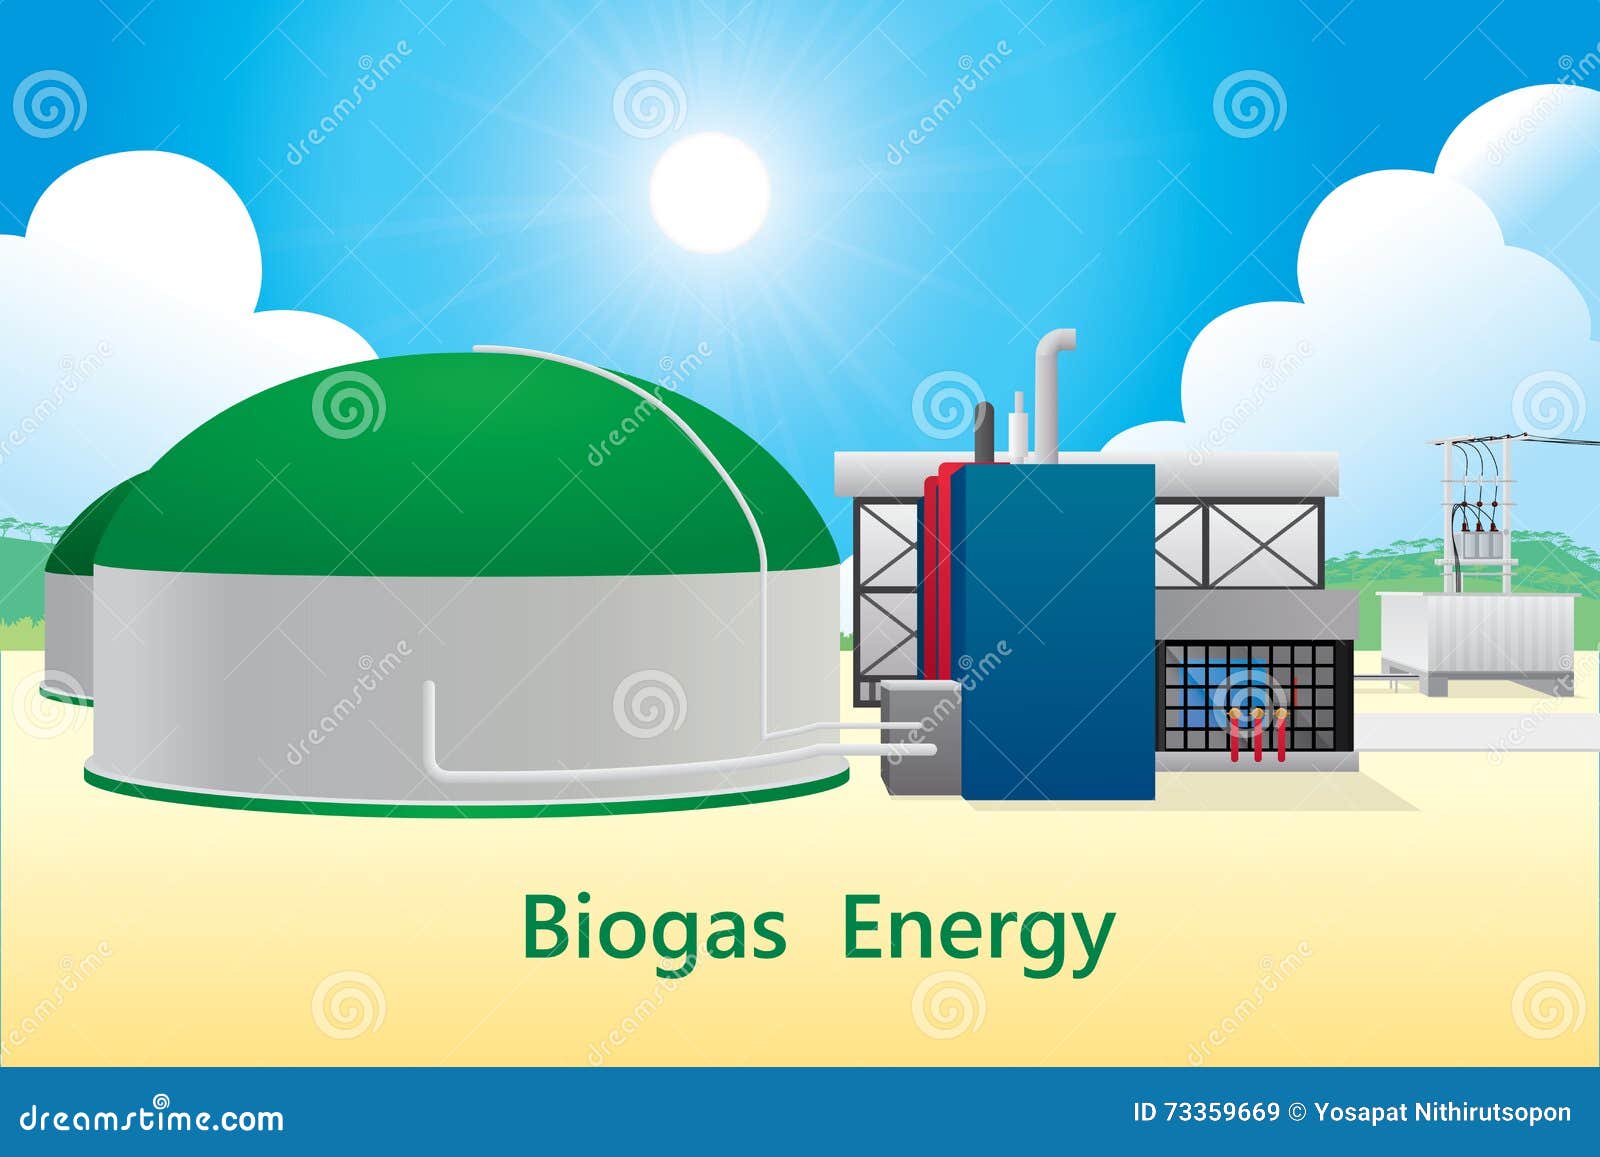 biogas energy